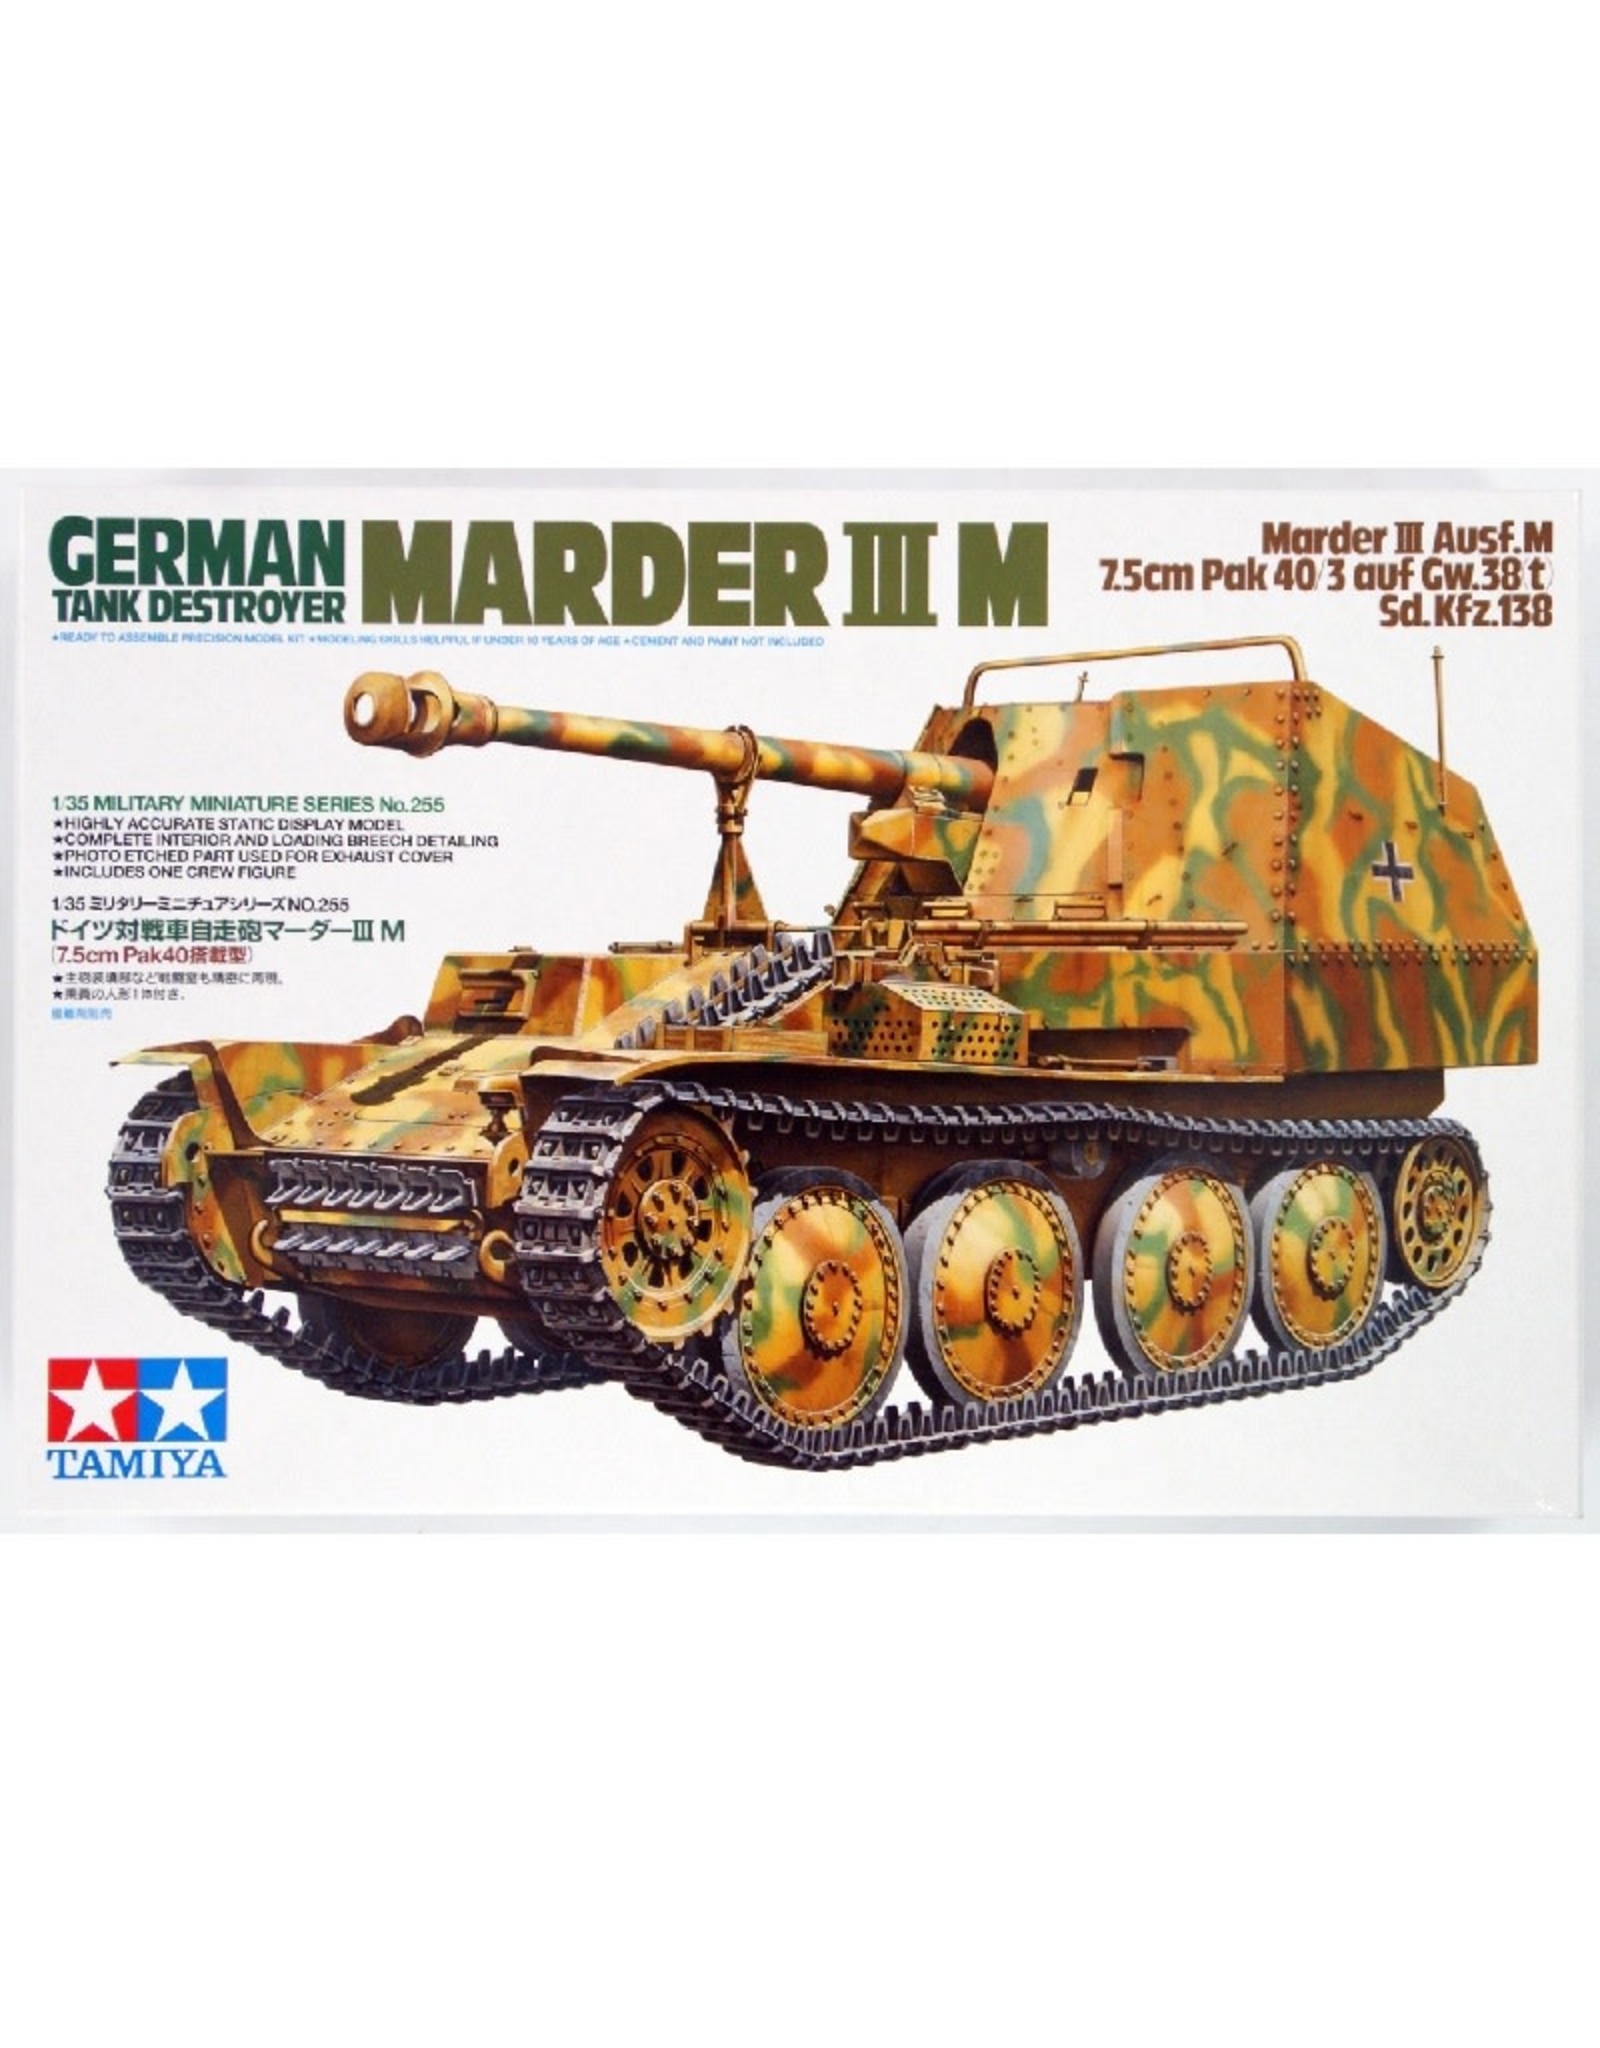 German Tank Destroyer Marder III - Family Fun Hobbies